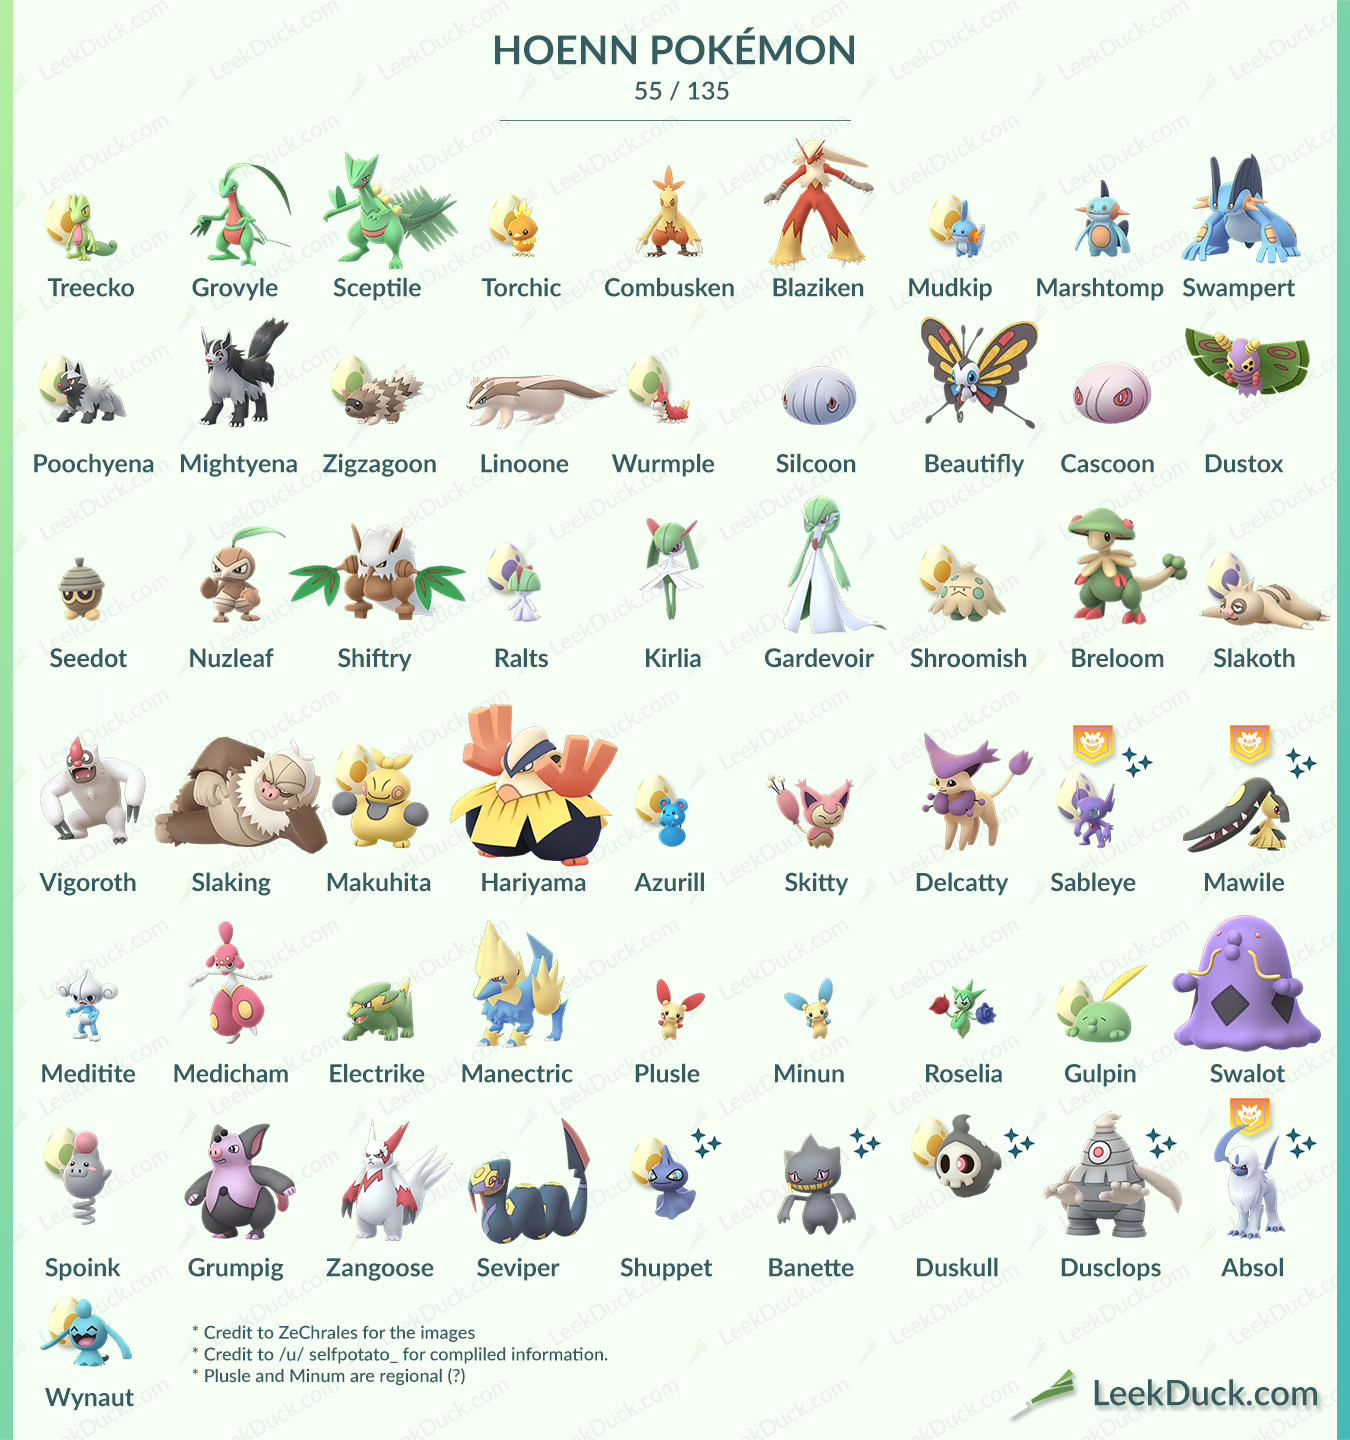 " All Hoenn Pokemon available currently in Pokemon Go. Including Shiny ...